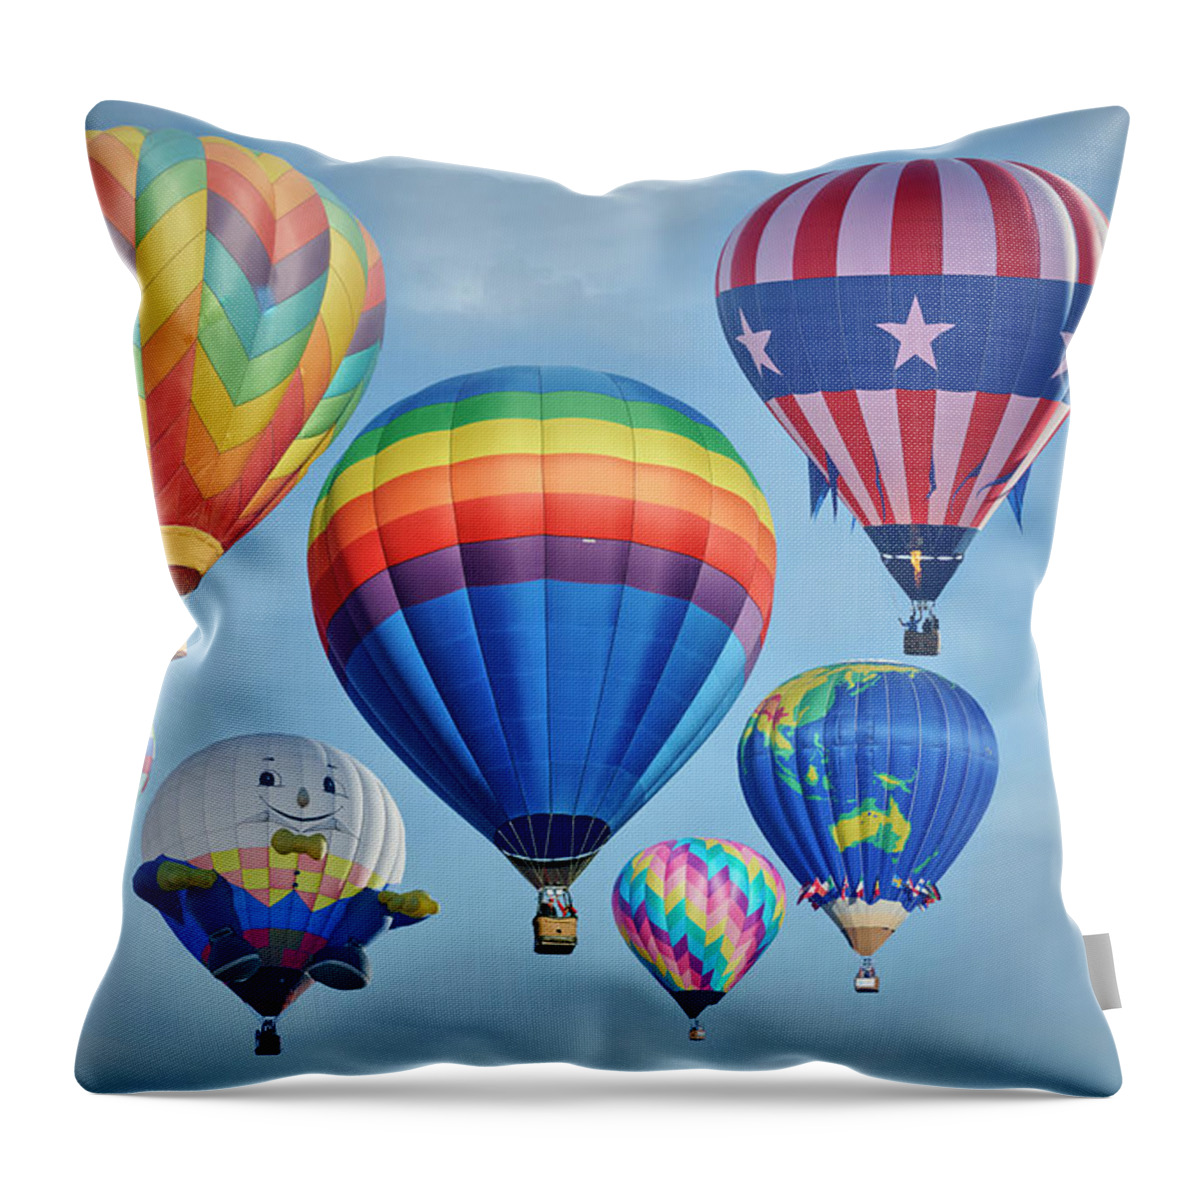 Hot Air Balloons Throw Pillow featuring the photograph Hot Air Balloons by Paul Freidlund